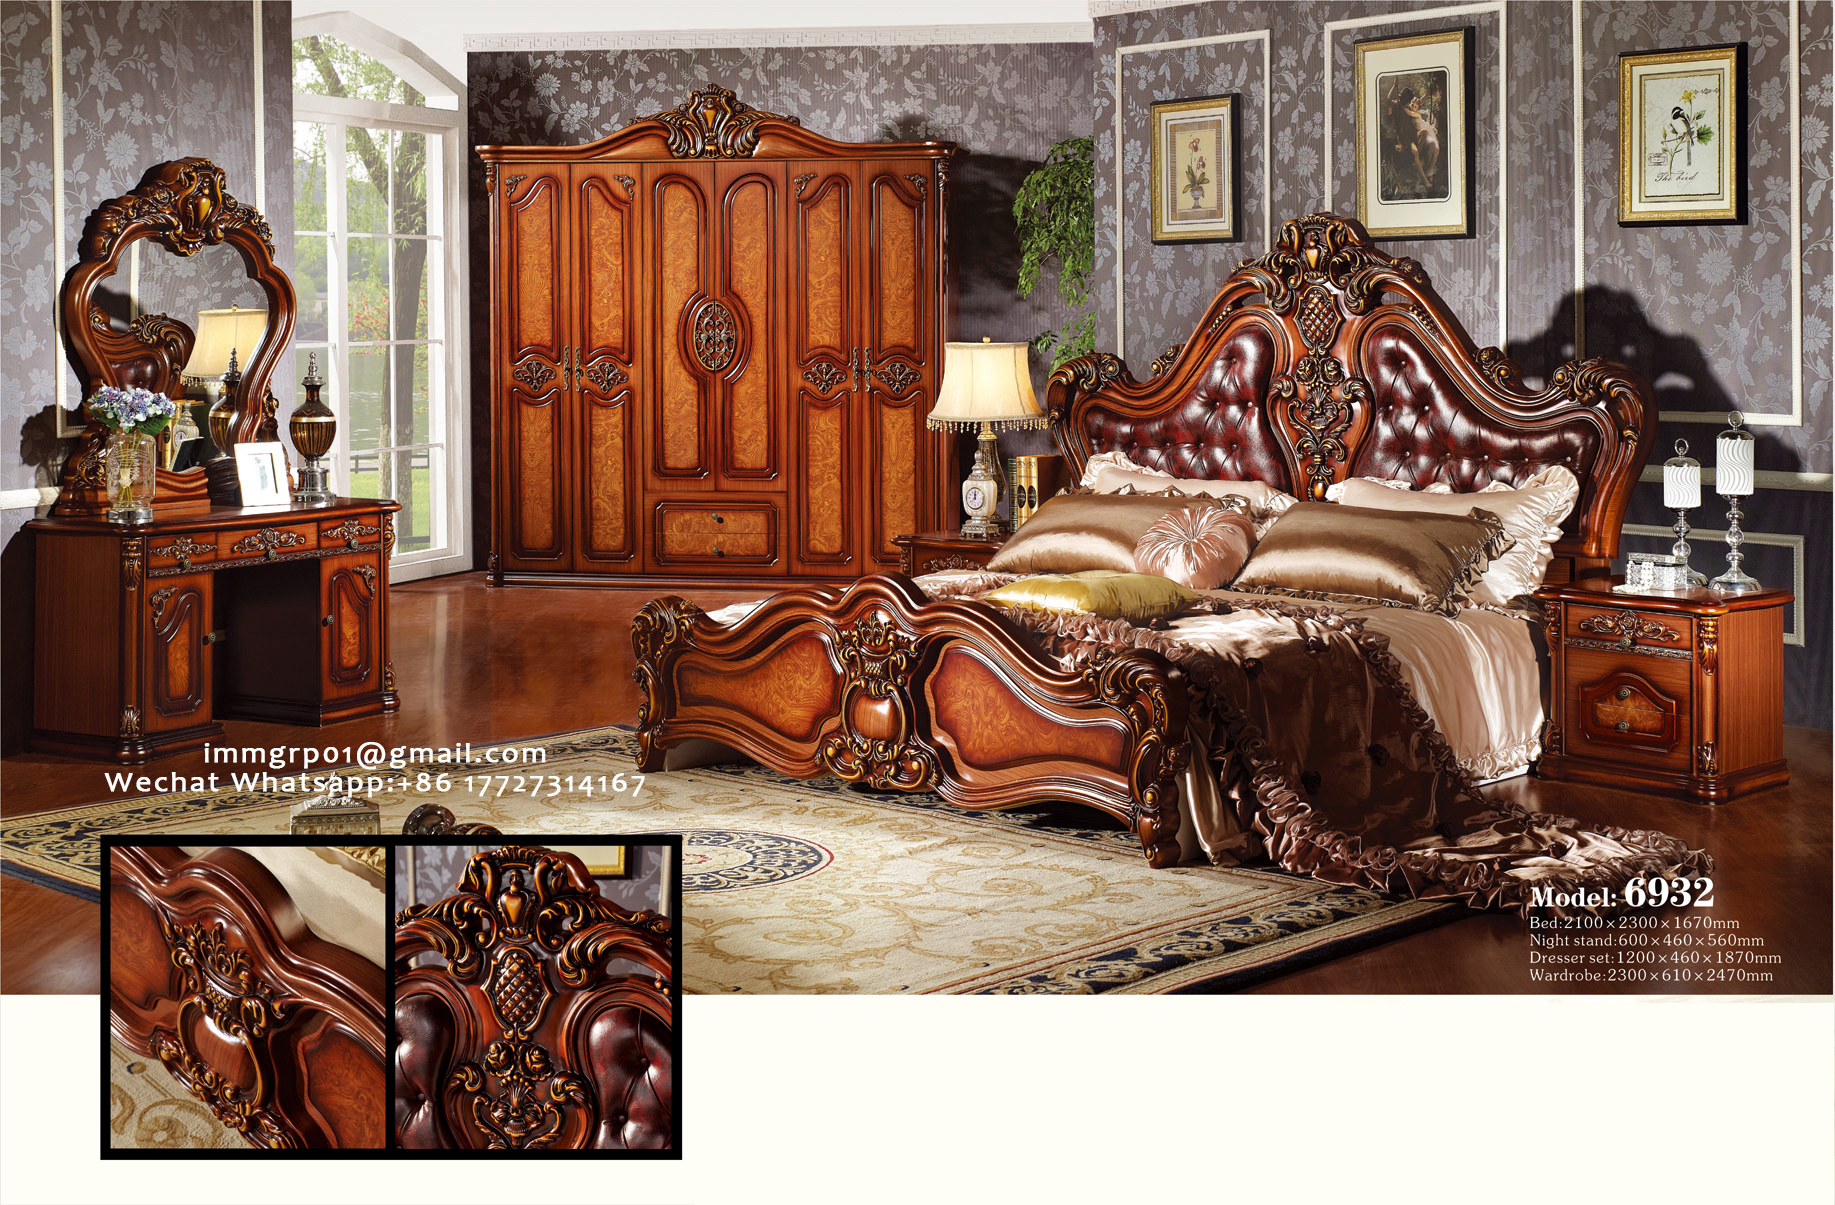 Factory Wholesale MDF Iran Bedroom Furniture 